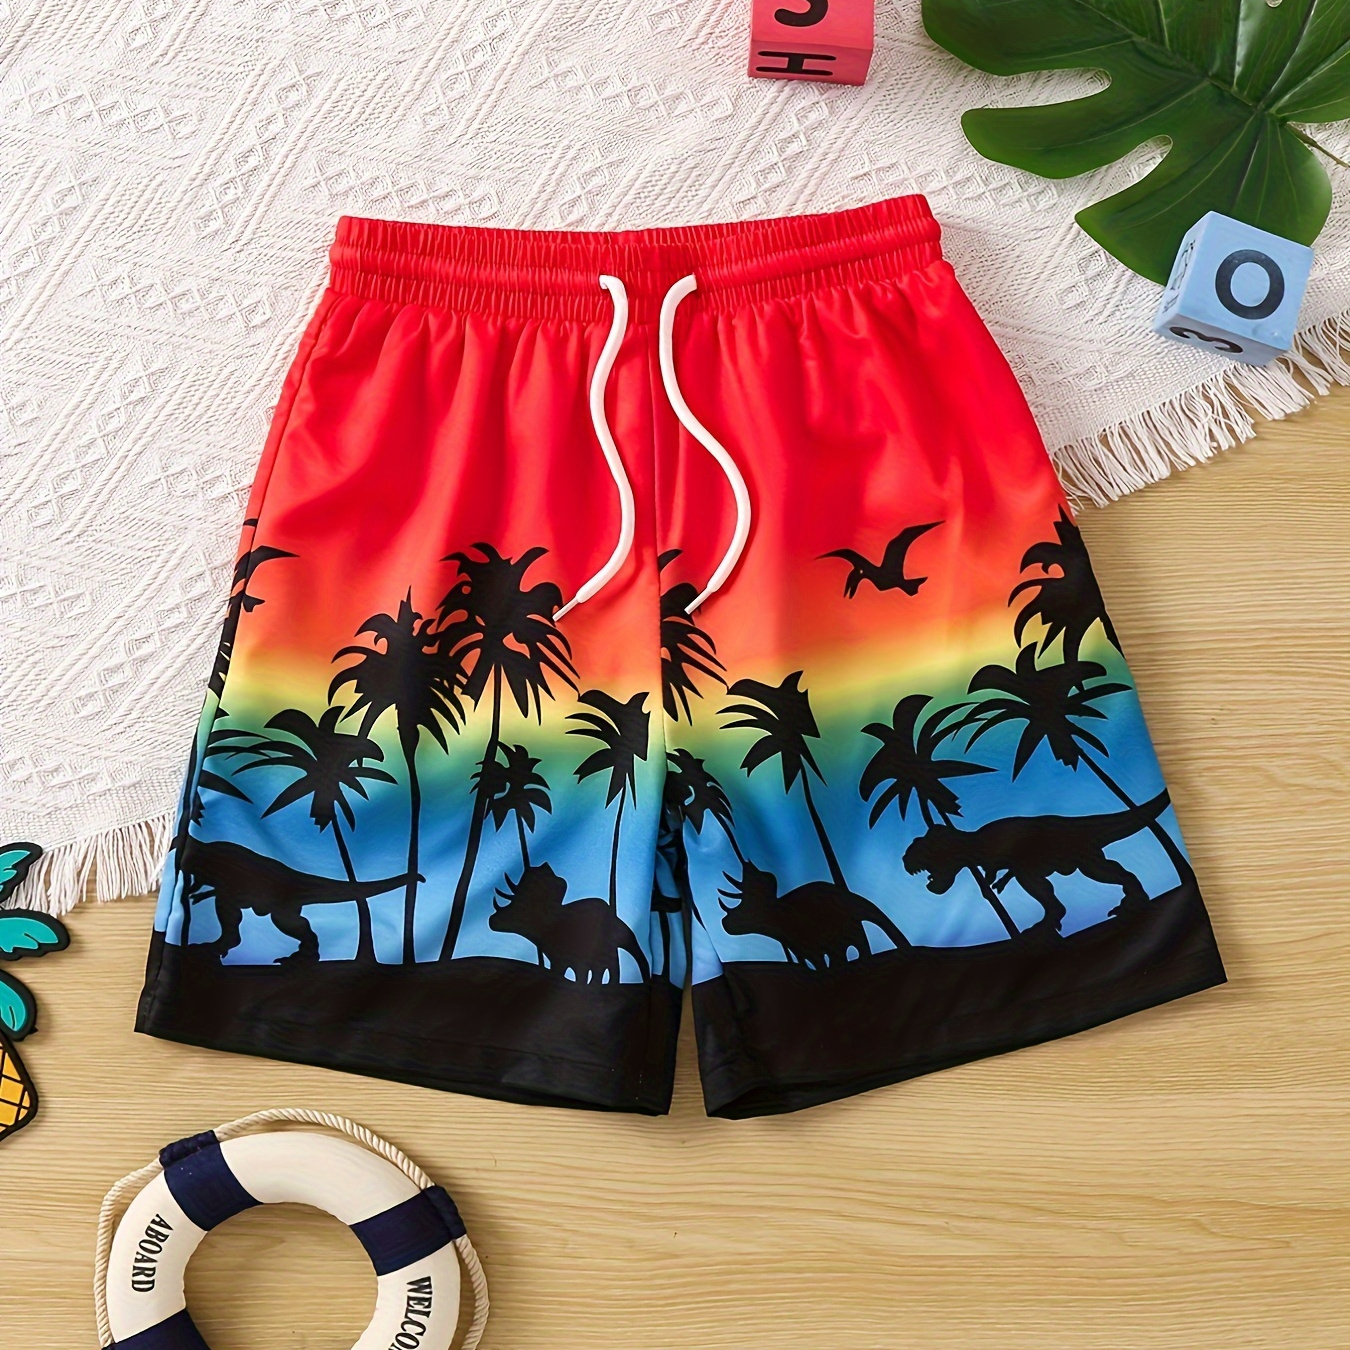 

Sunset Beach Pattern Quick Dry Swim Trunks For Boys, Elastic Waist Beach Shorts, Boys Swimwear For Summer Vacation